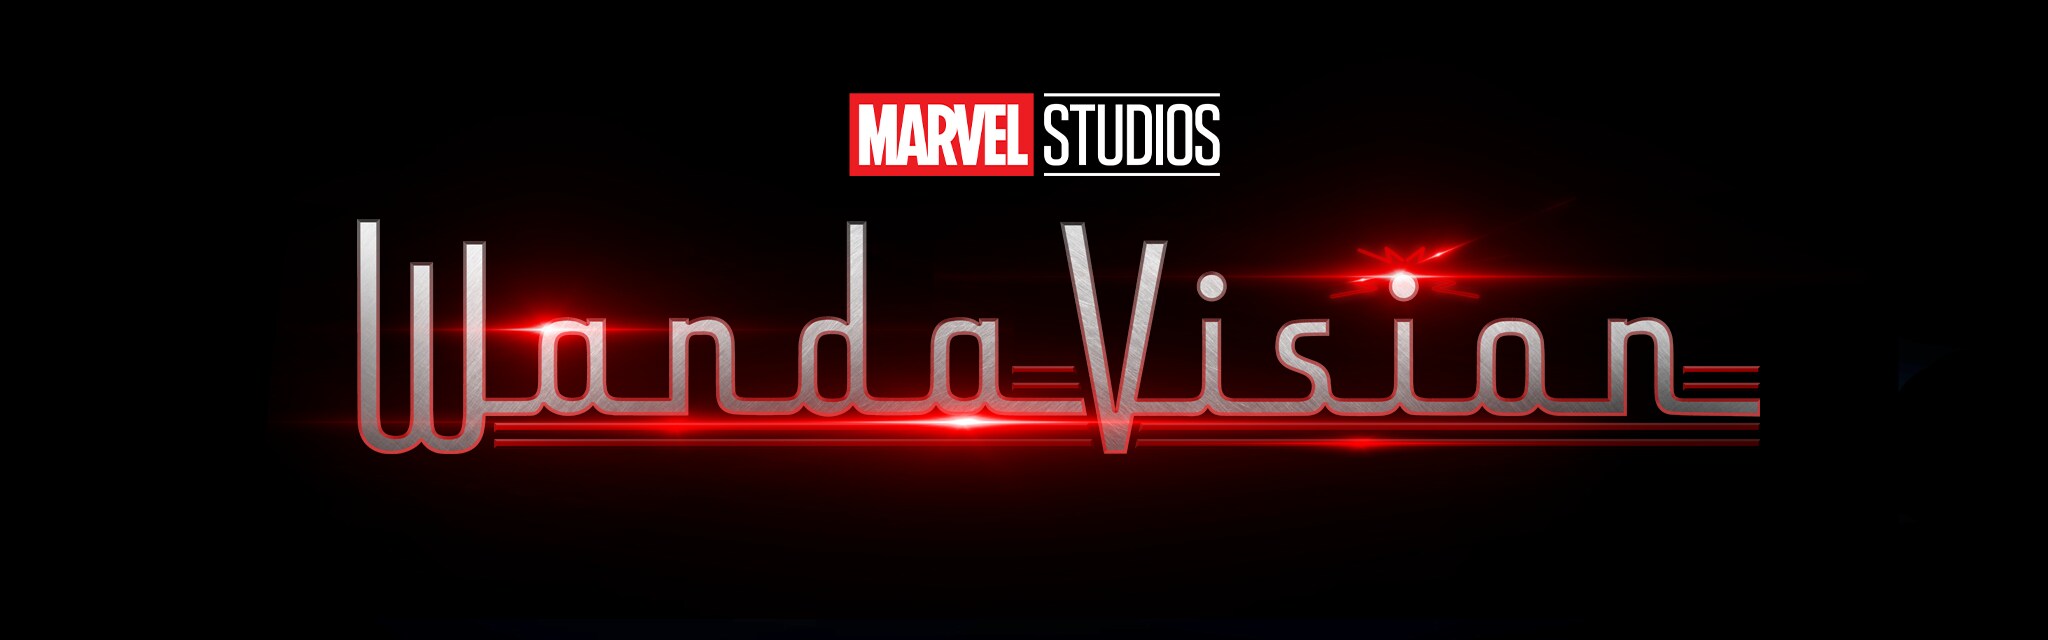 Marvel Studios | WandaVision